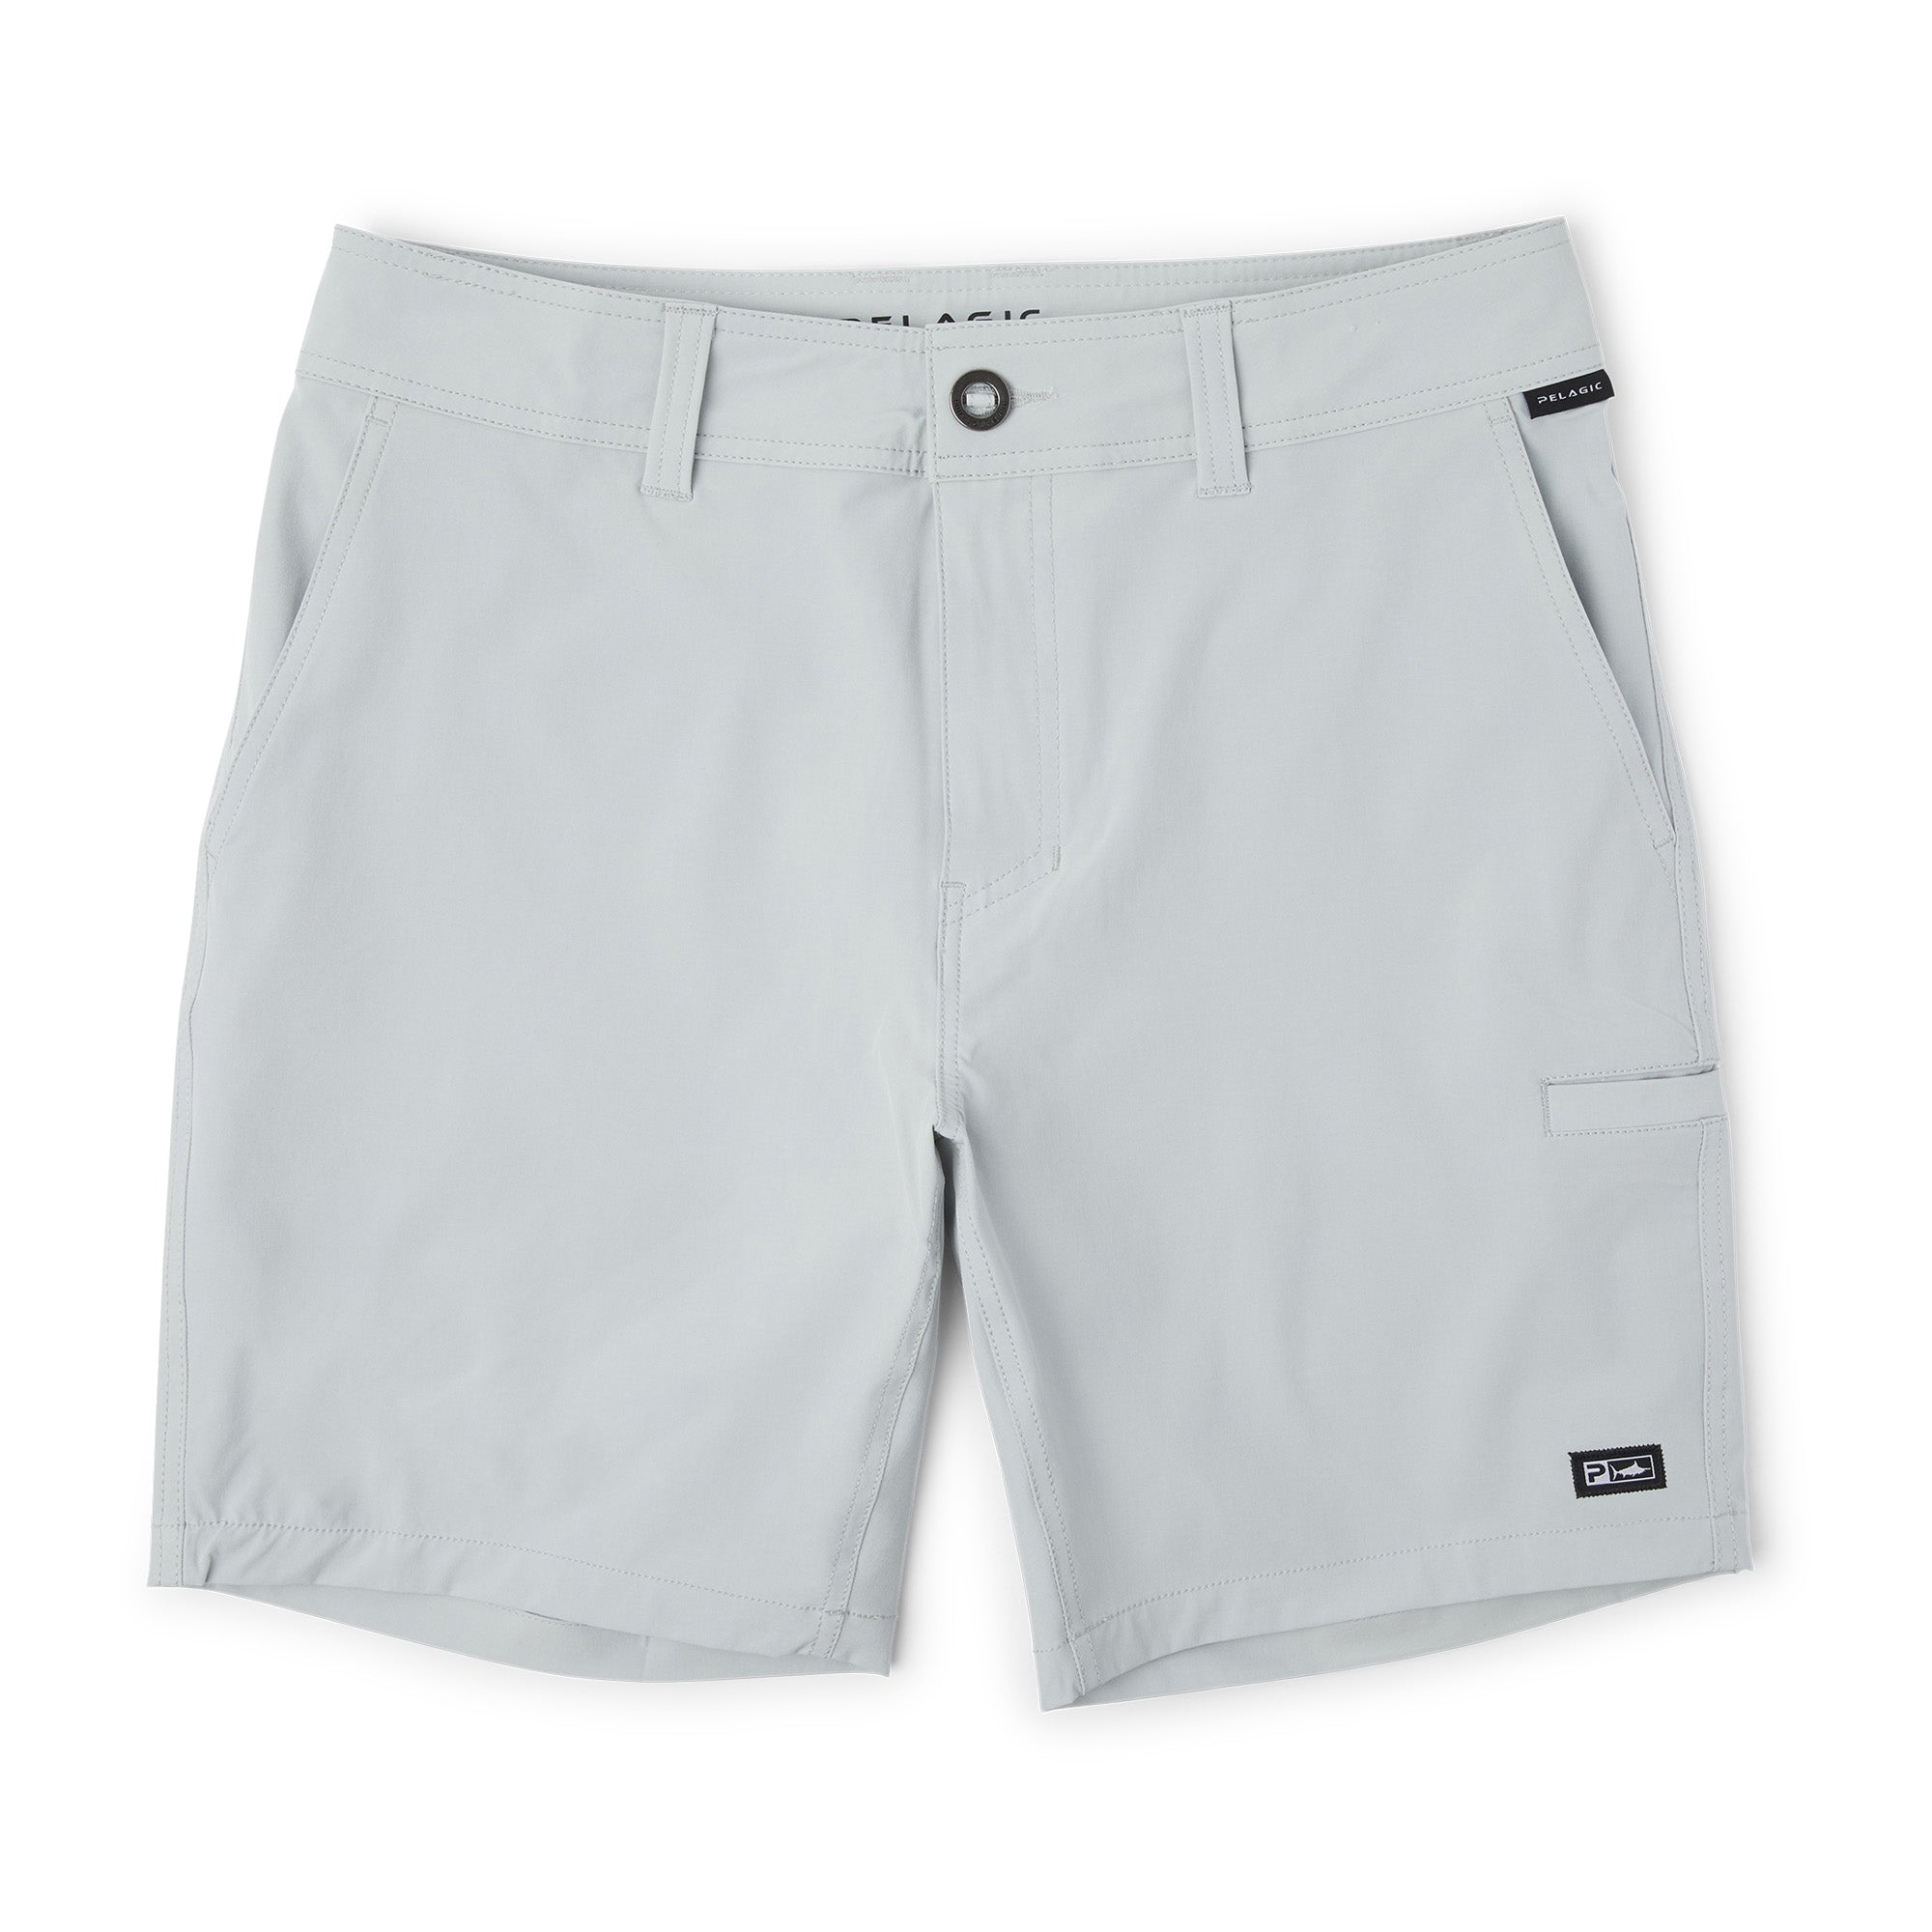 Pelagic Mako Hybrid Shorts 18 44 / Light Grey